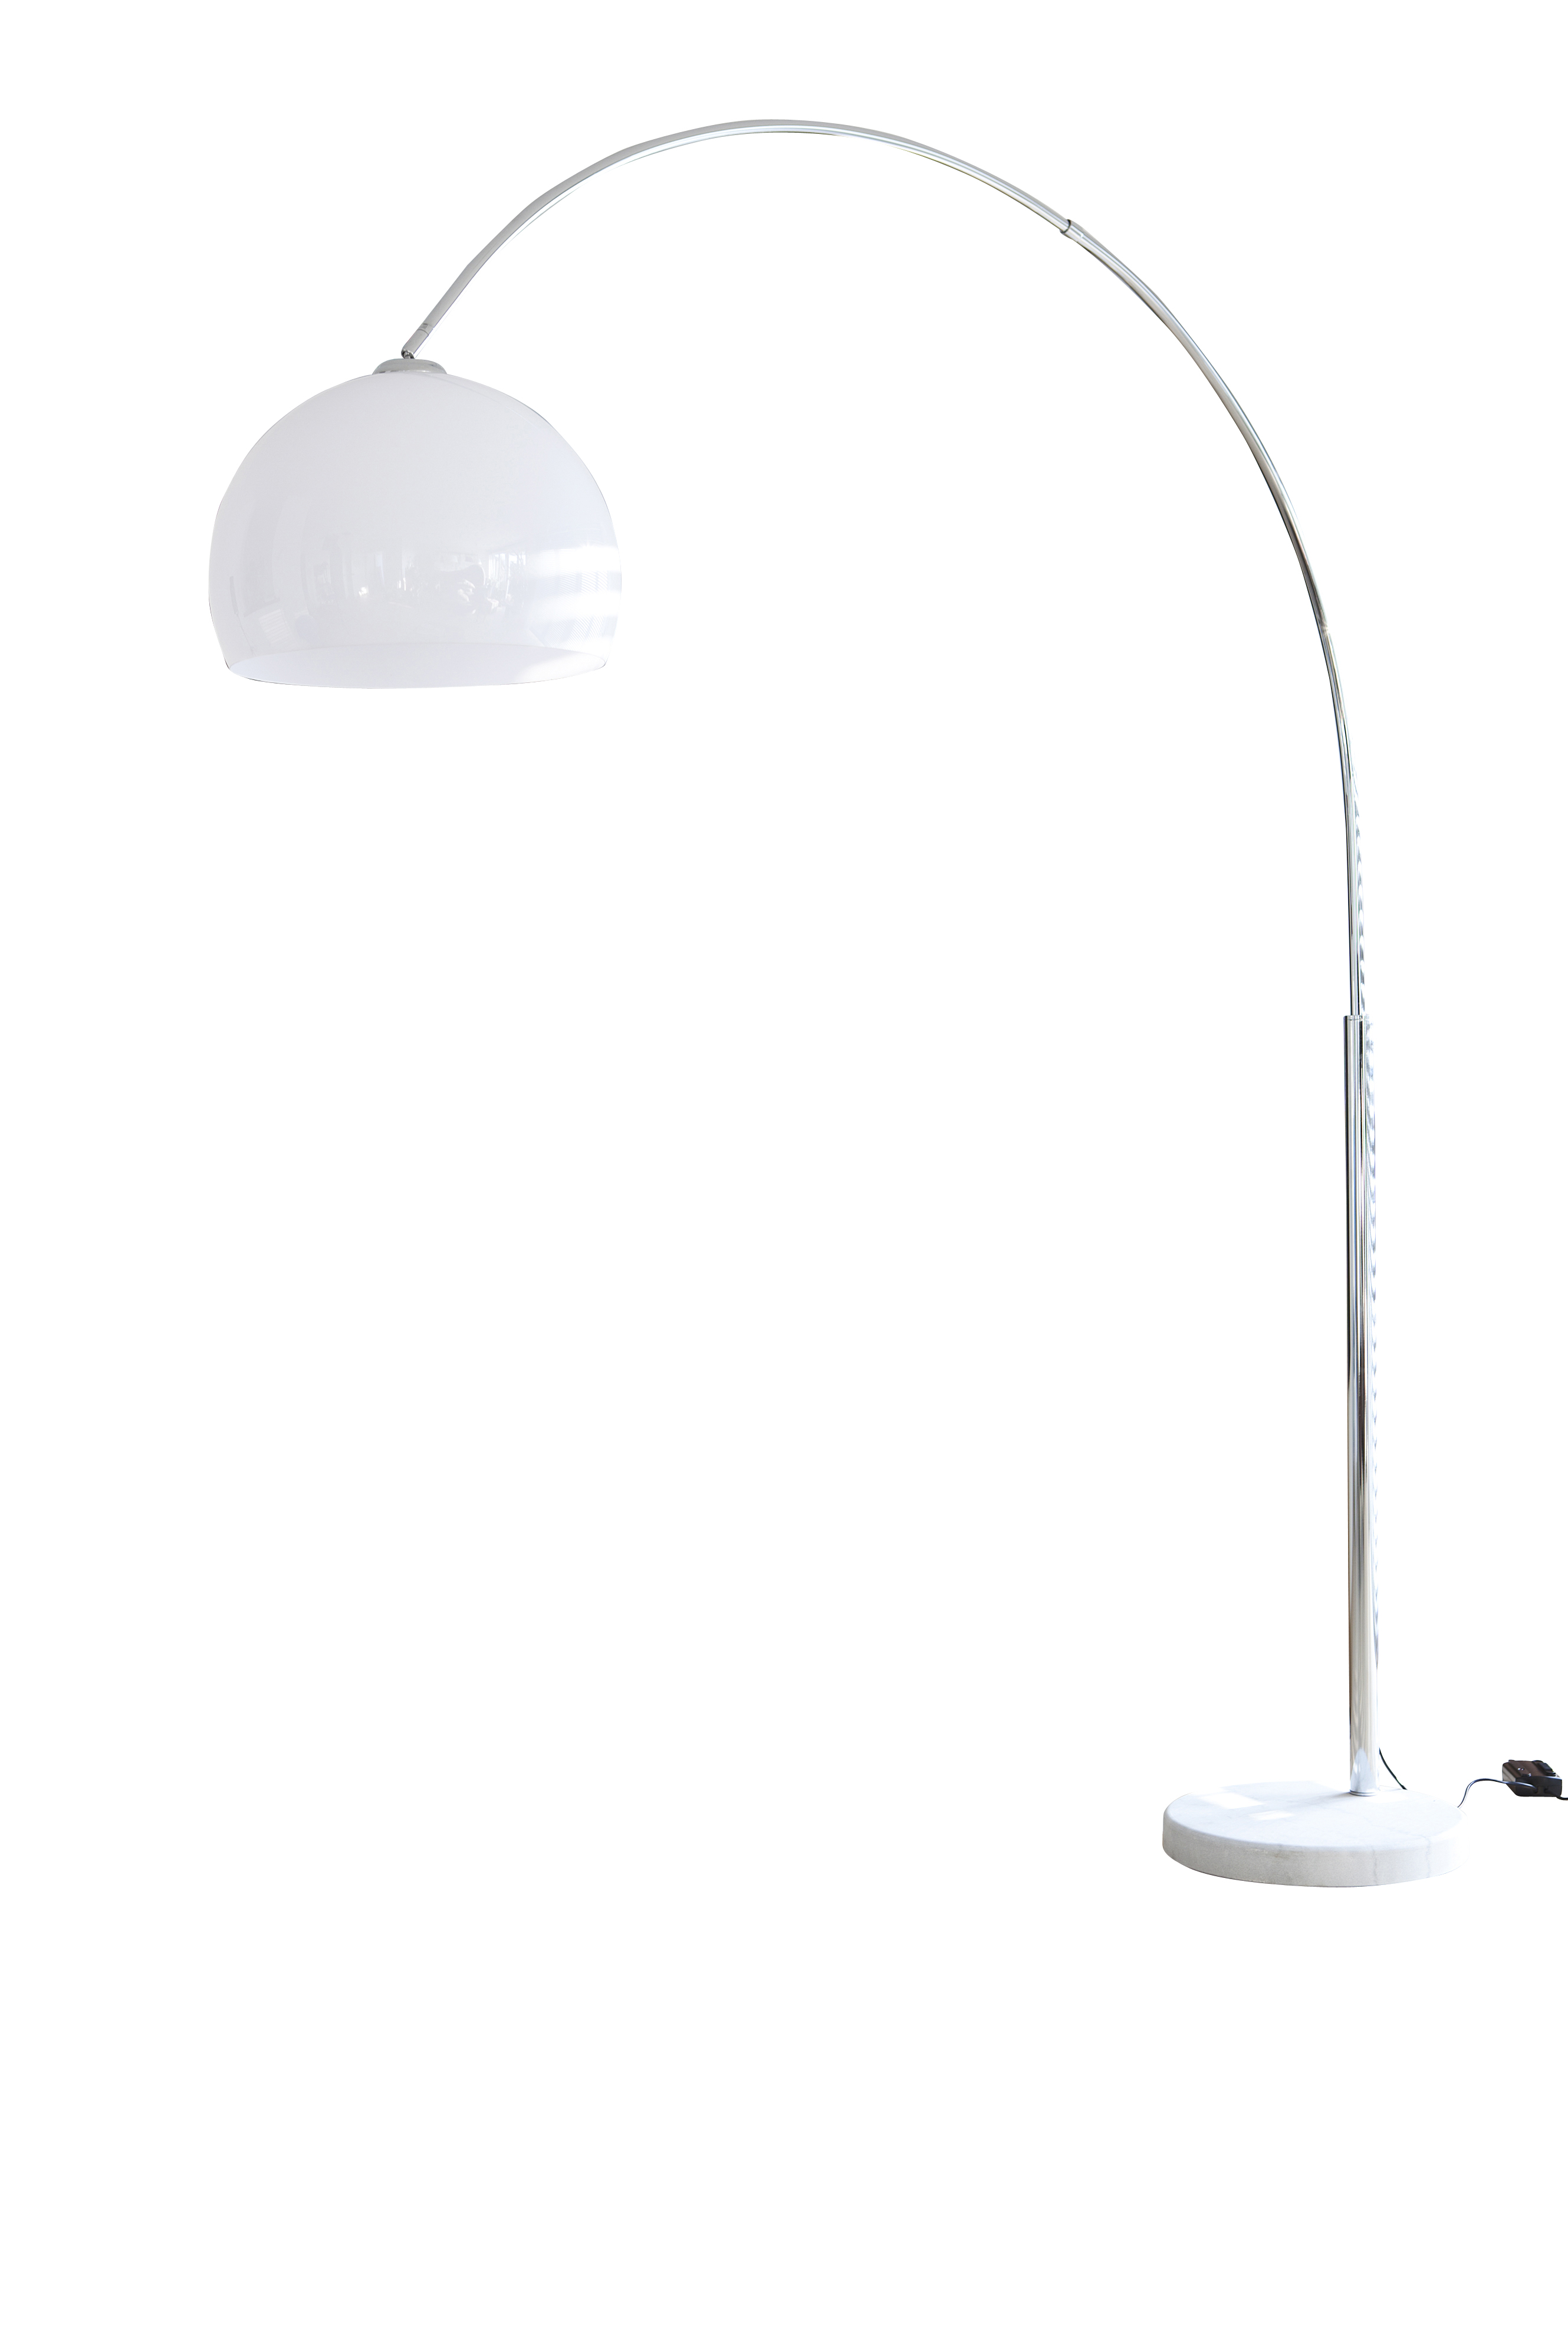 SalesFever Bogenlampe 208 cm weiß